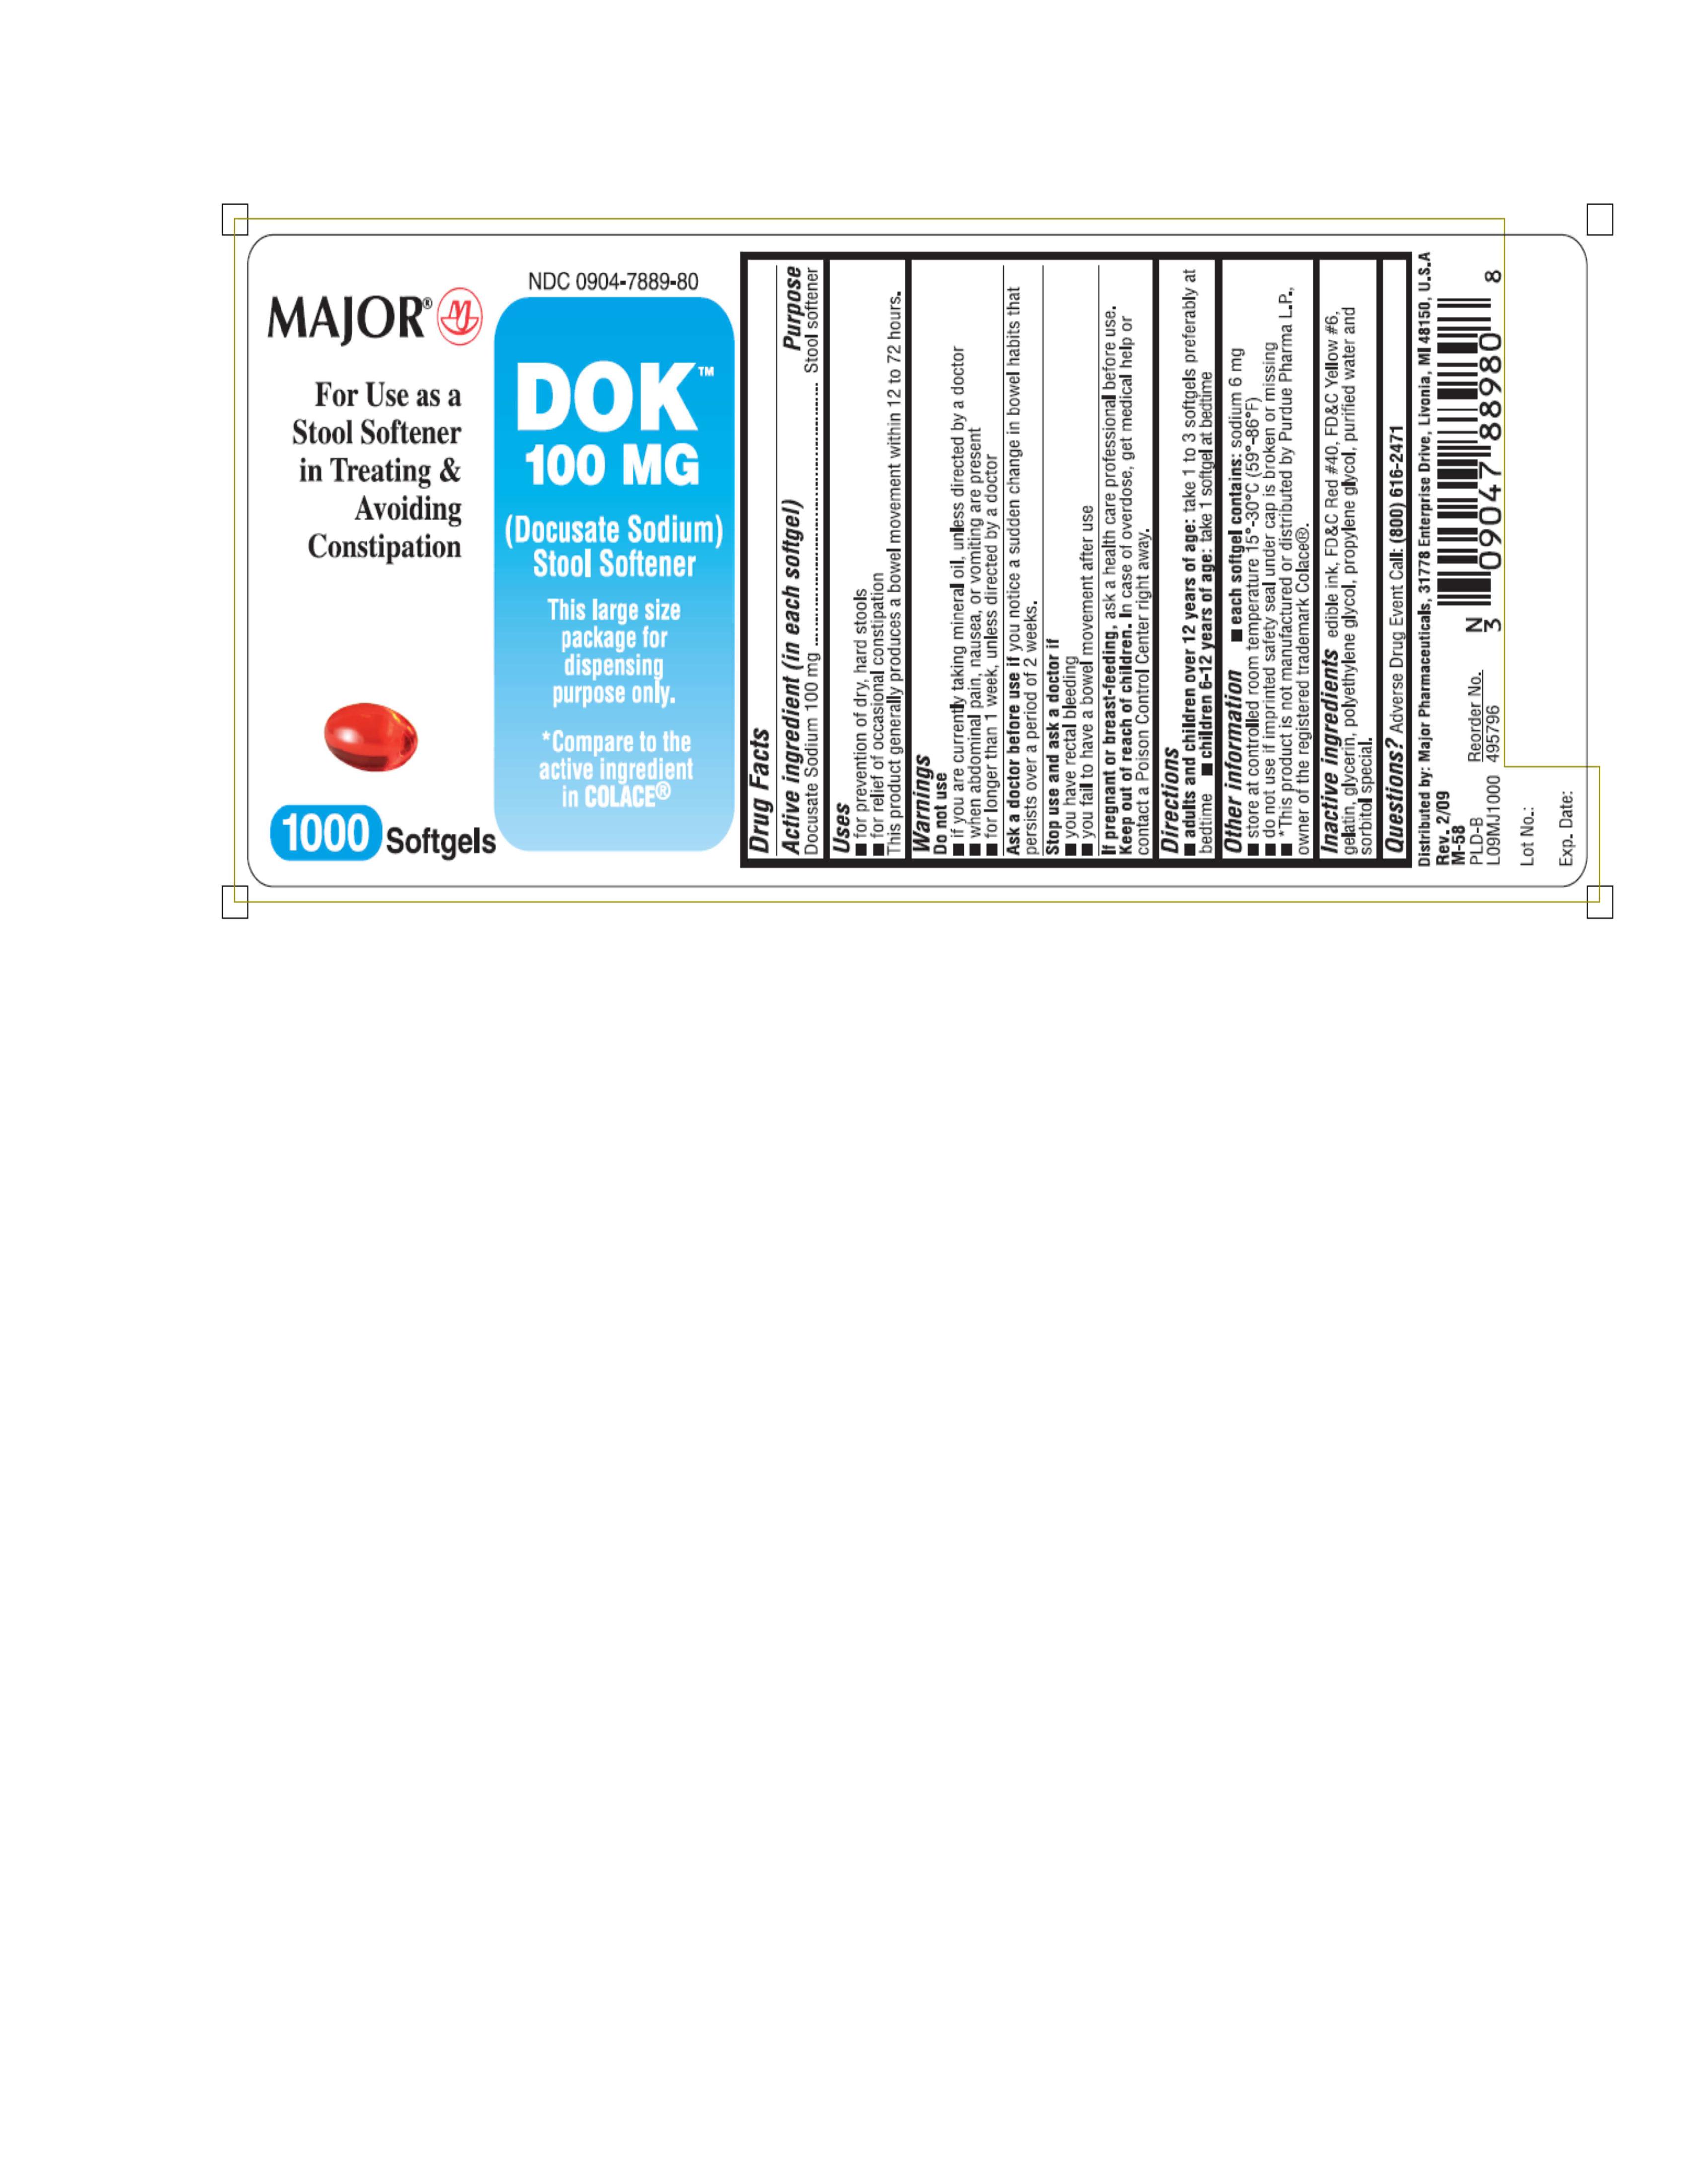 Major DOK Stool Softener 100 mg 1000 count